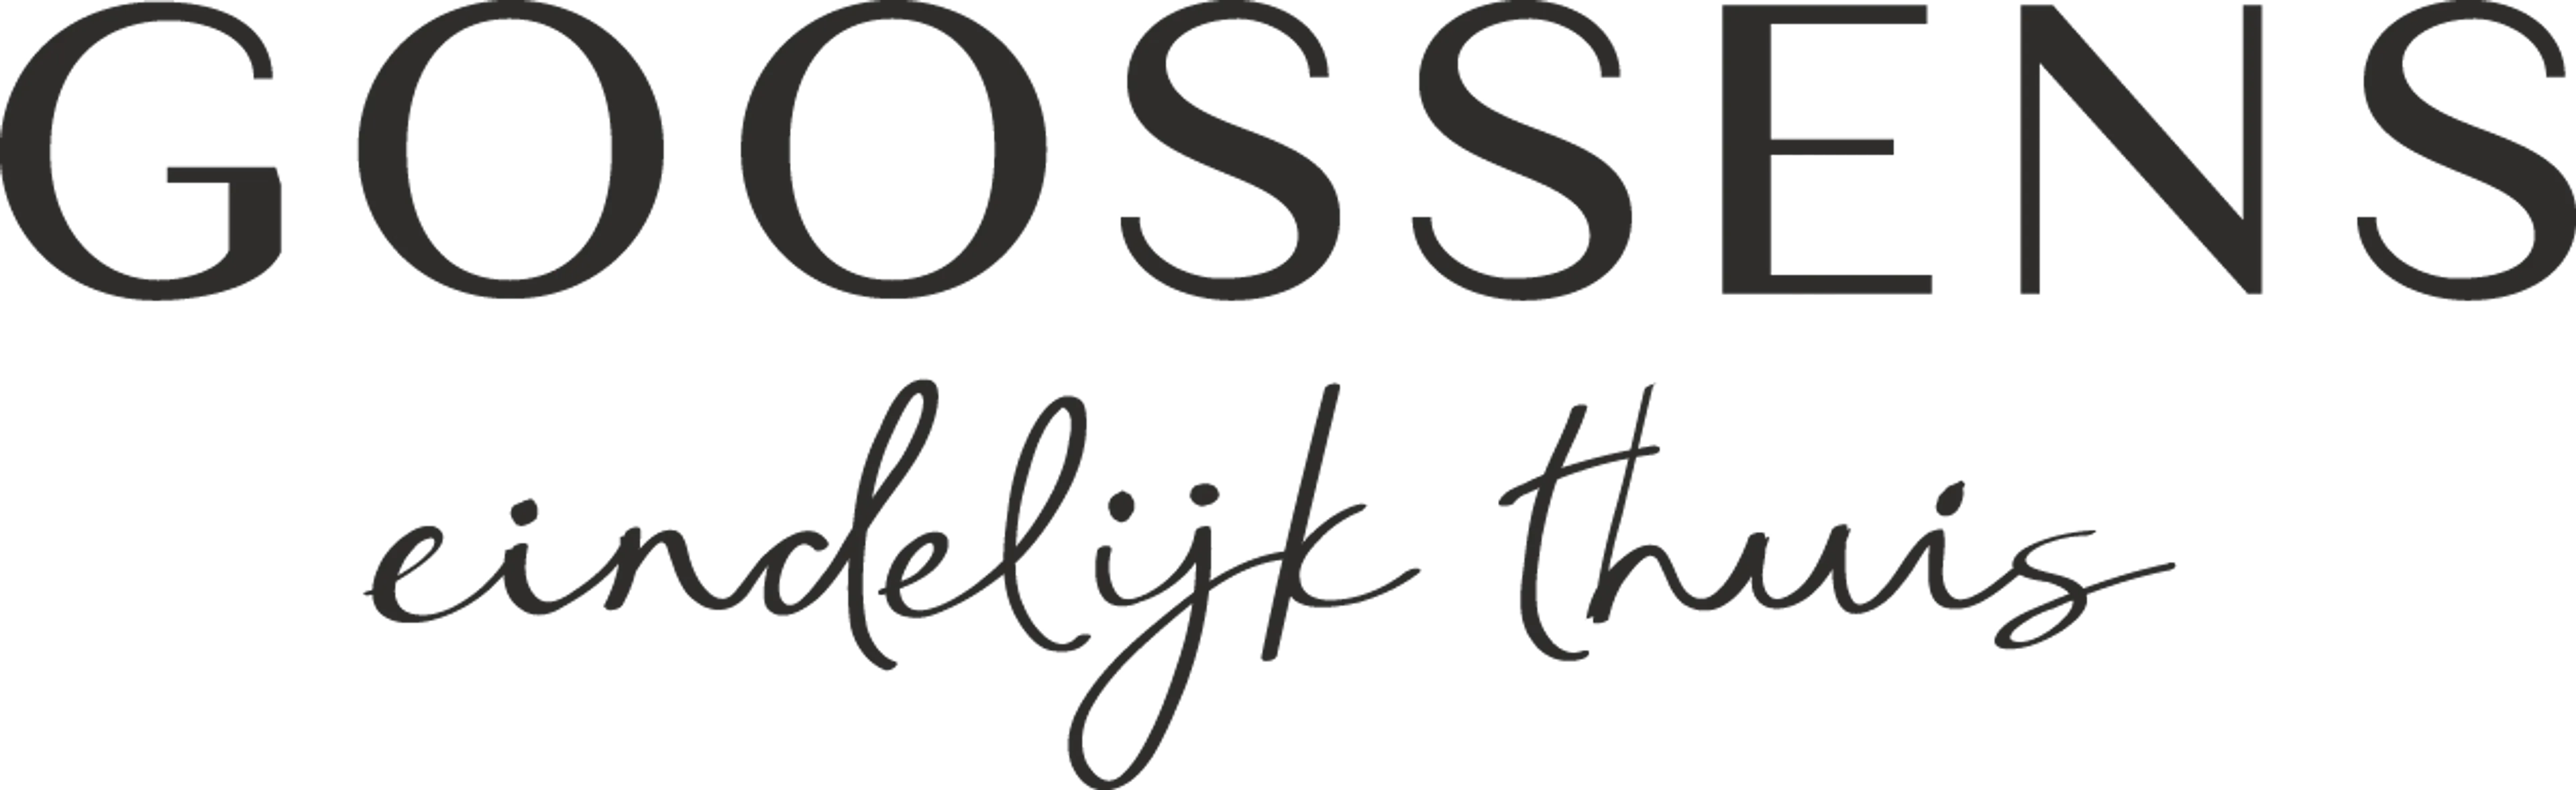 GOOSSENS logo